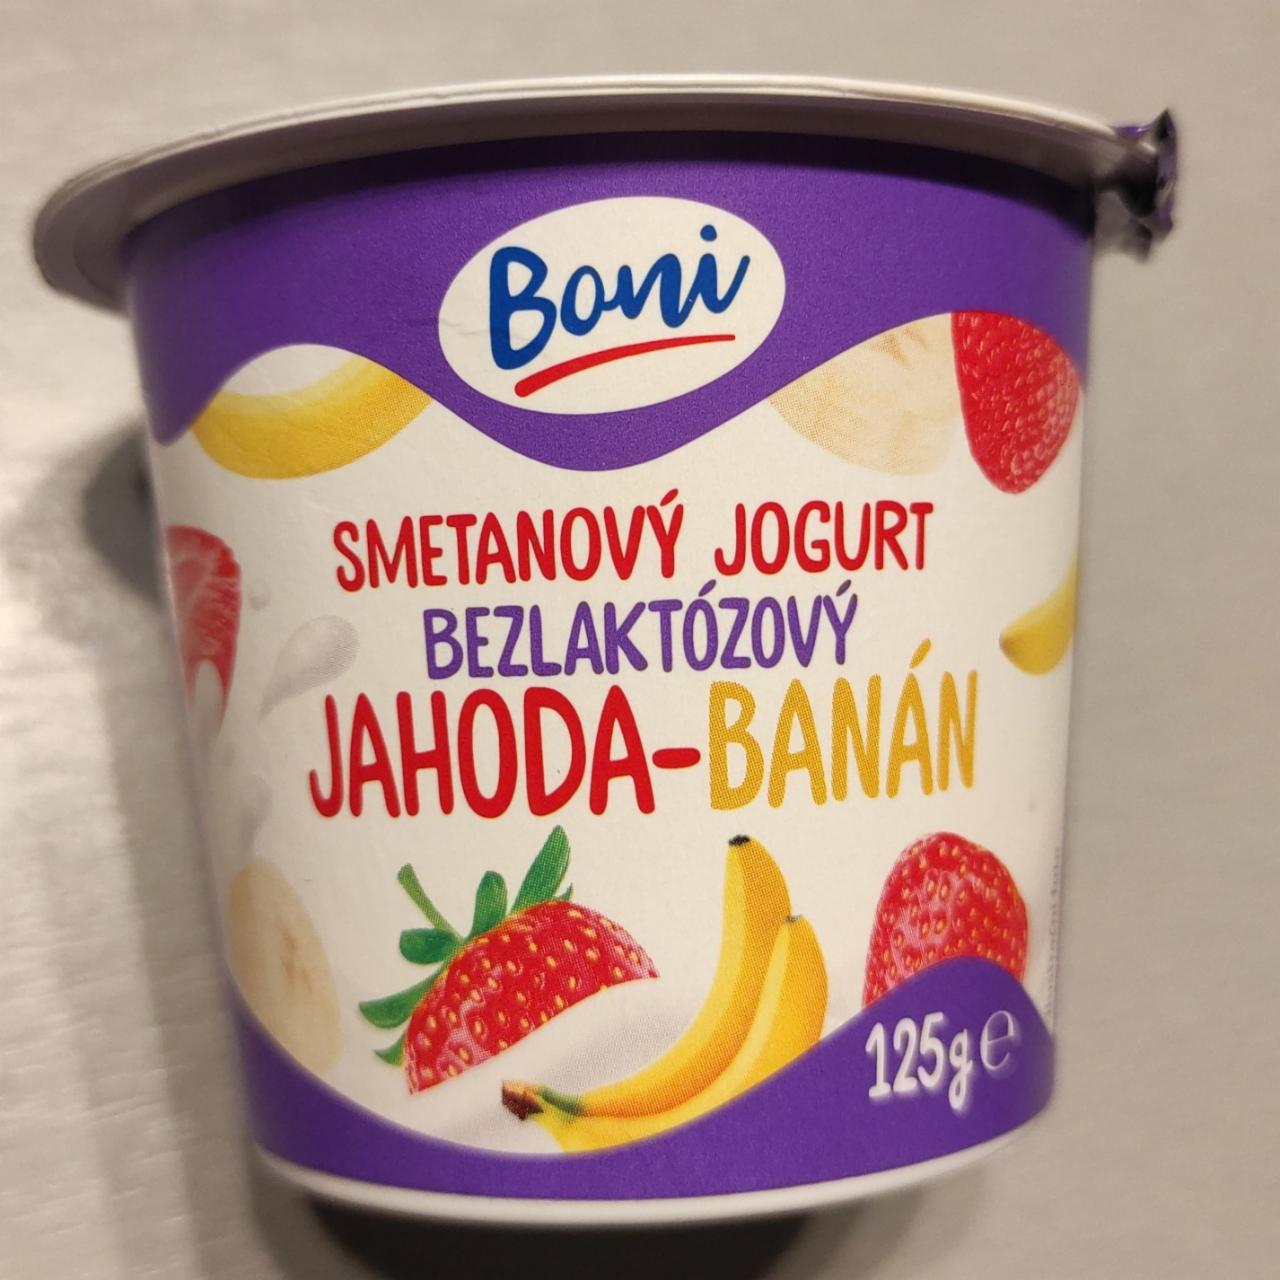 Fotografie - Smetanový jogurt bezlaktózový jahoda-banán Boni